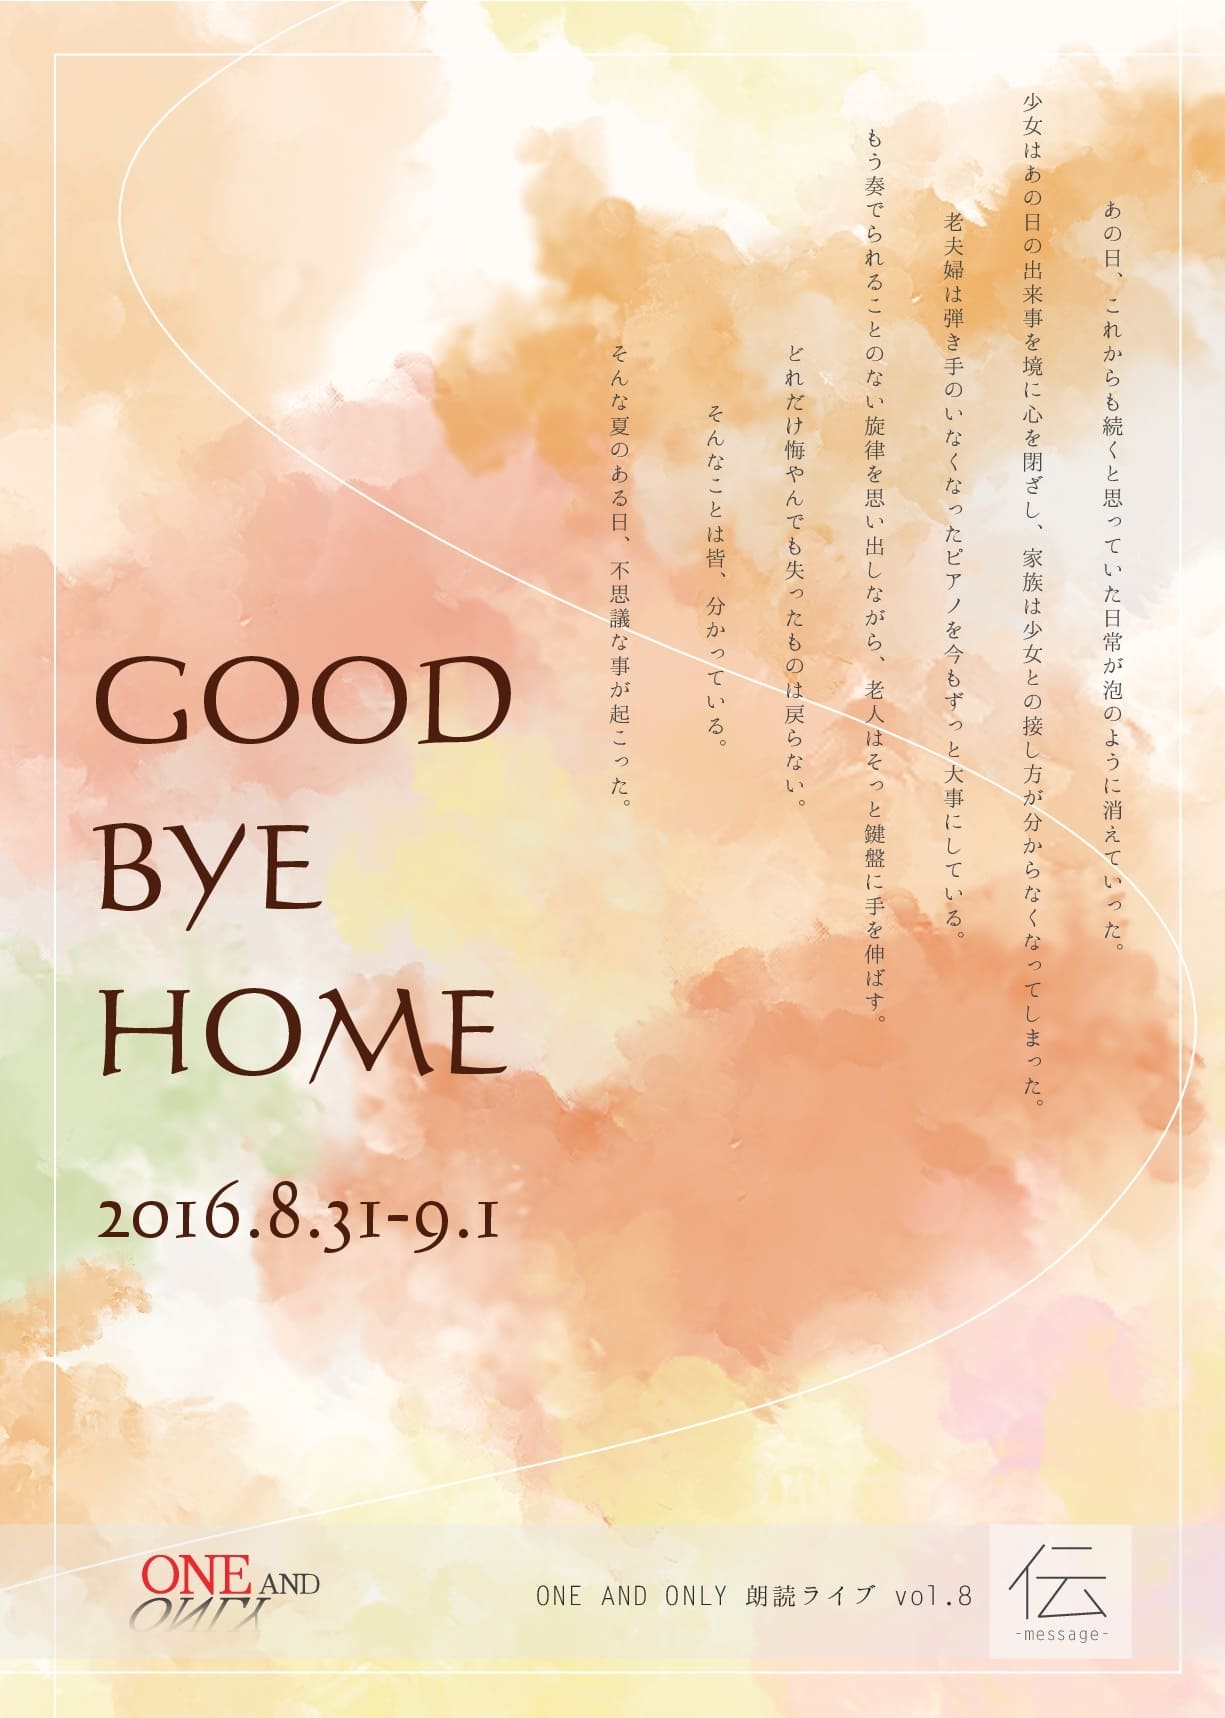 Good bye home